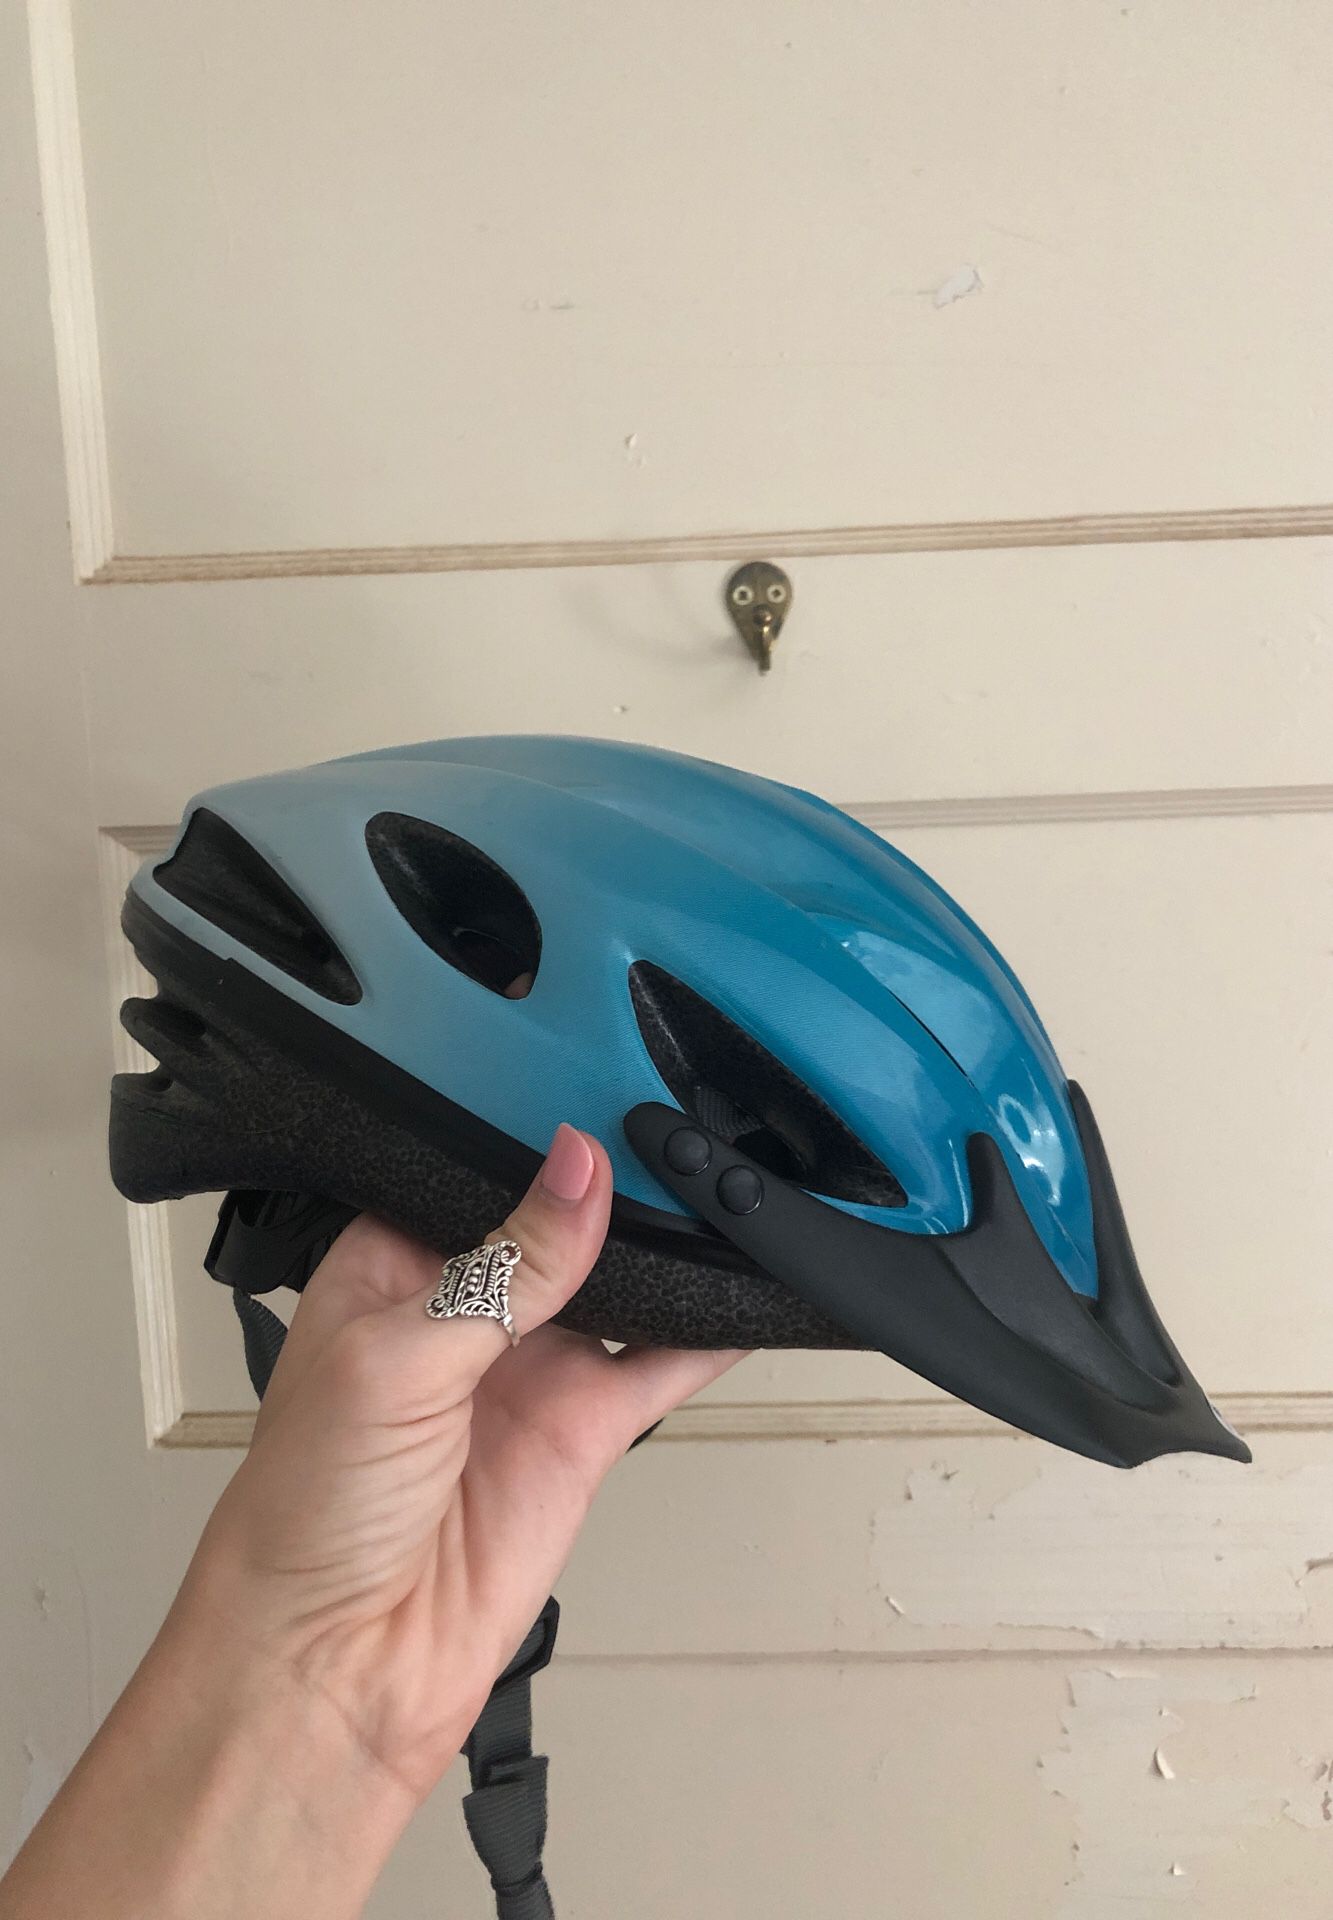 Back Trails Brand New bike helmet